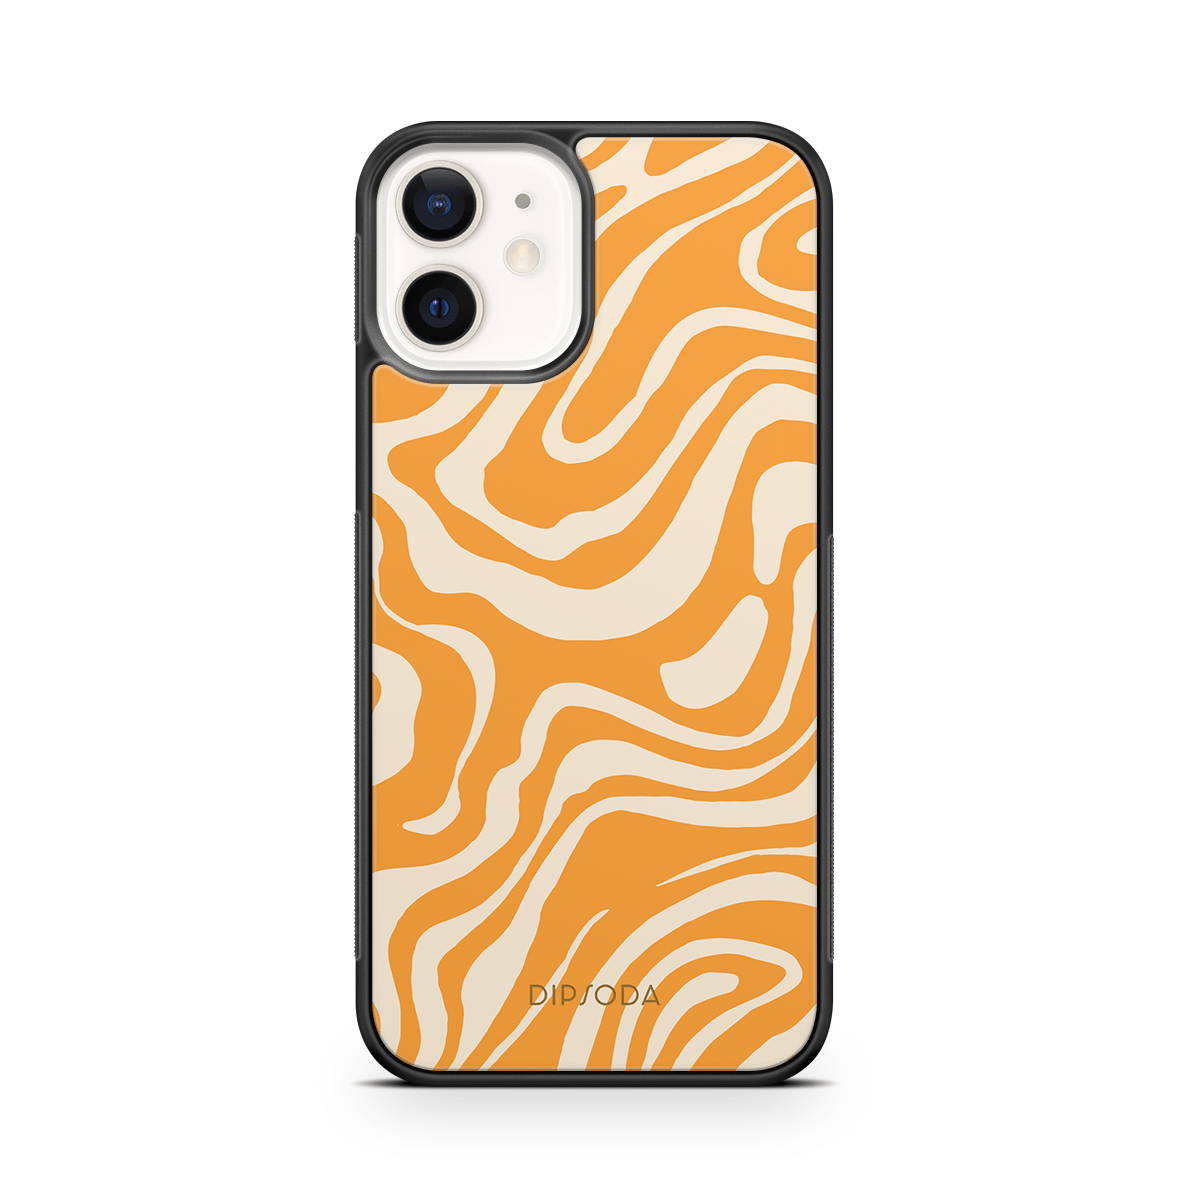 Orange Waves Rubber Phone Case